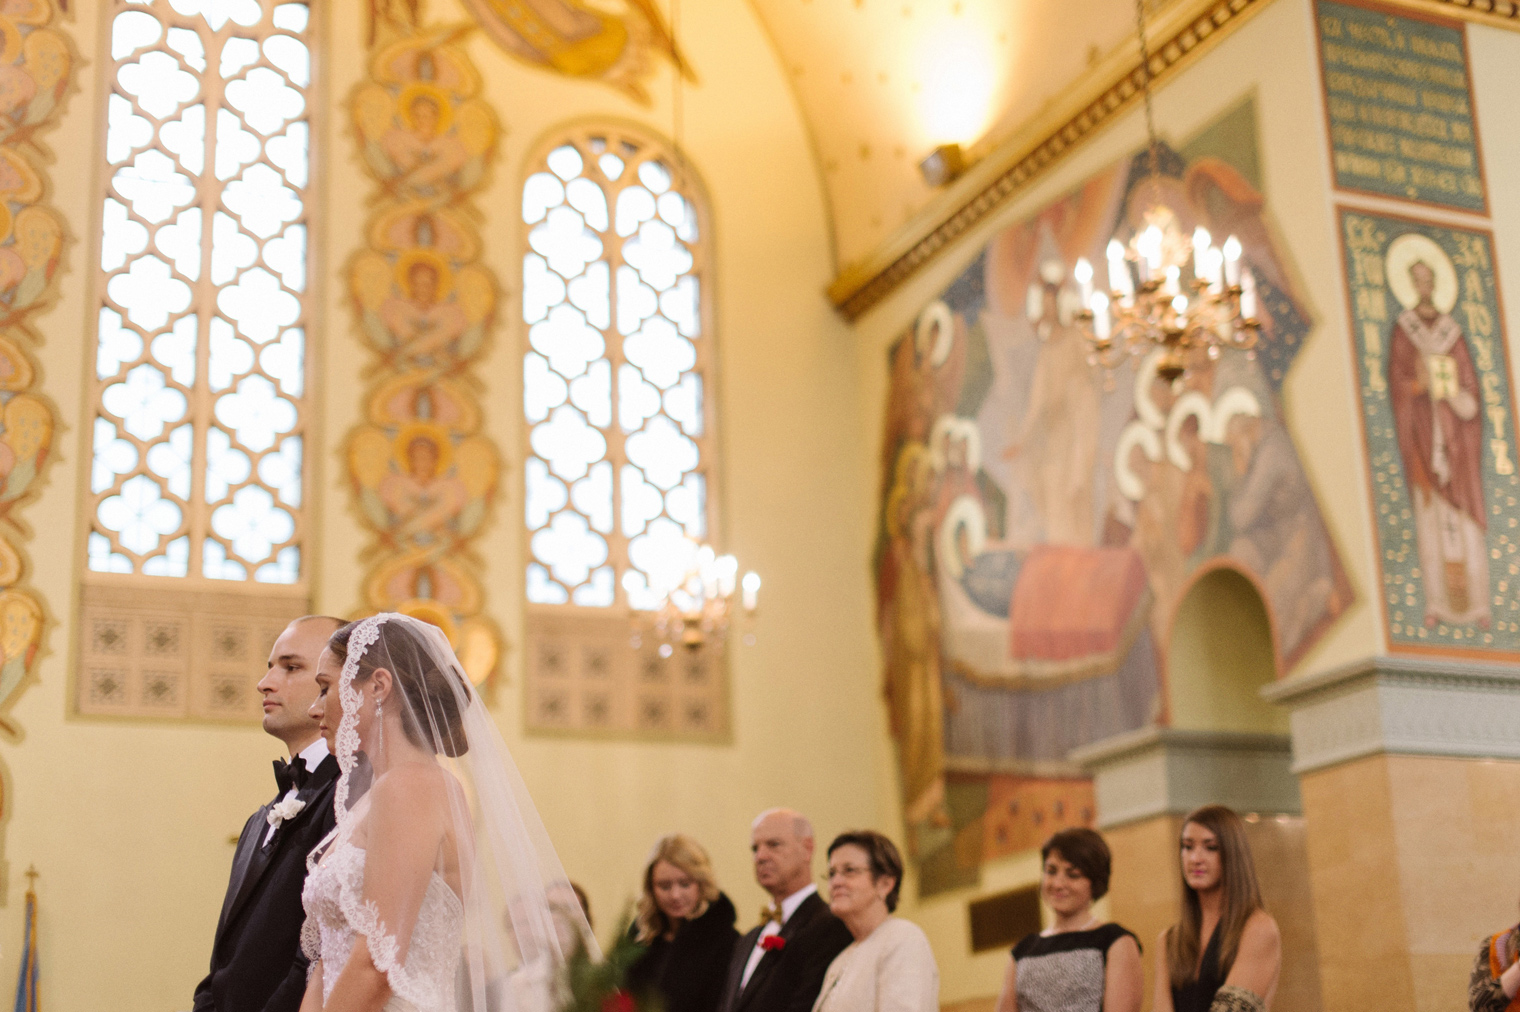 Ukrainian Orthodox Wedding Ceremony in Hamtramck Michigan by photographer Heather Jowett.